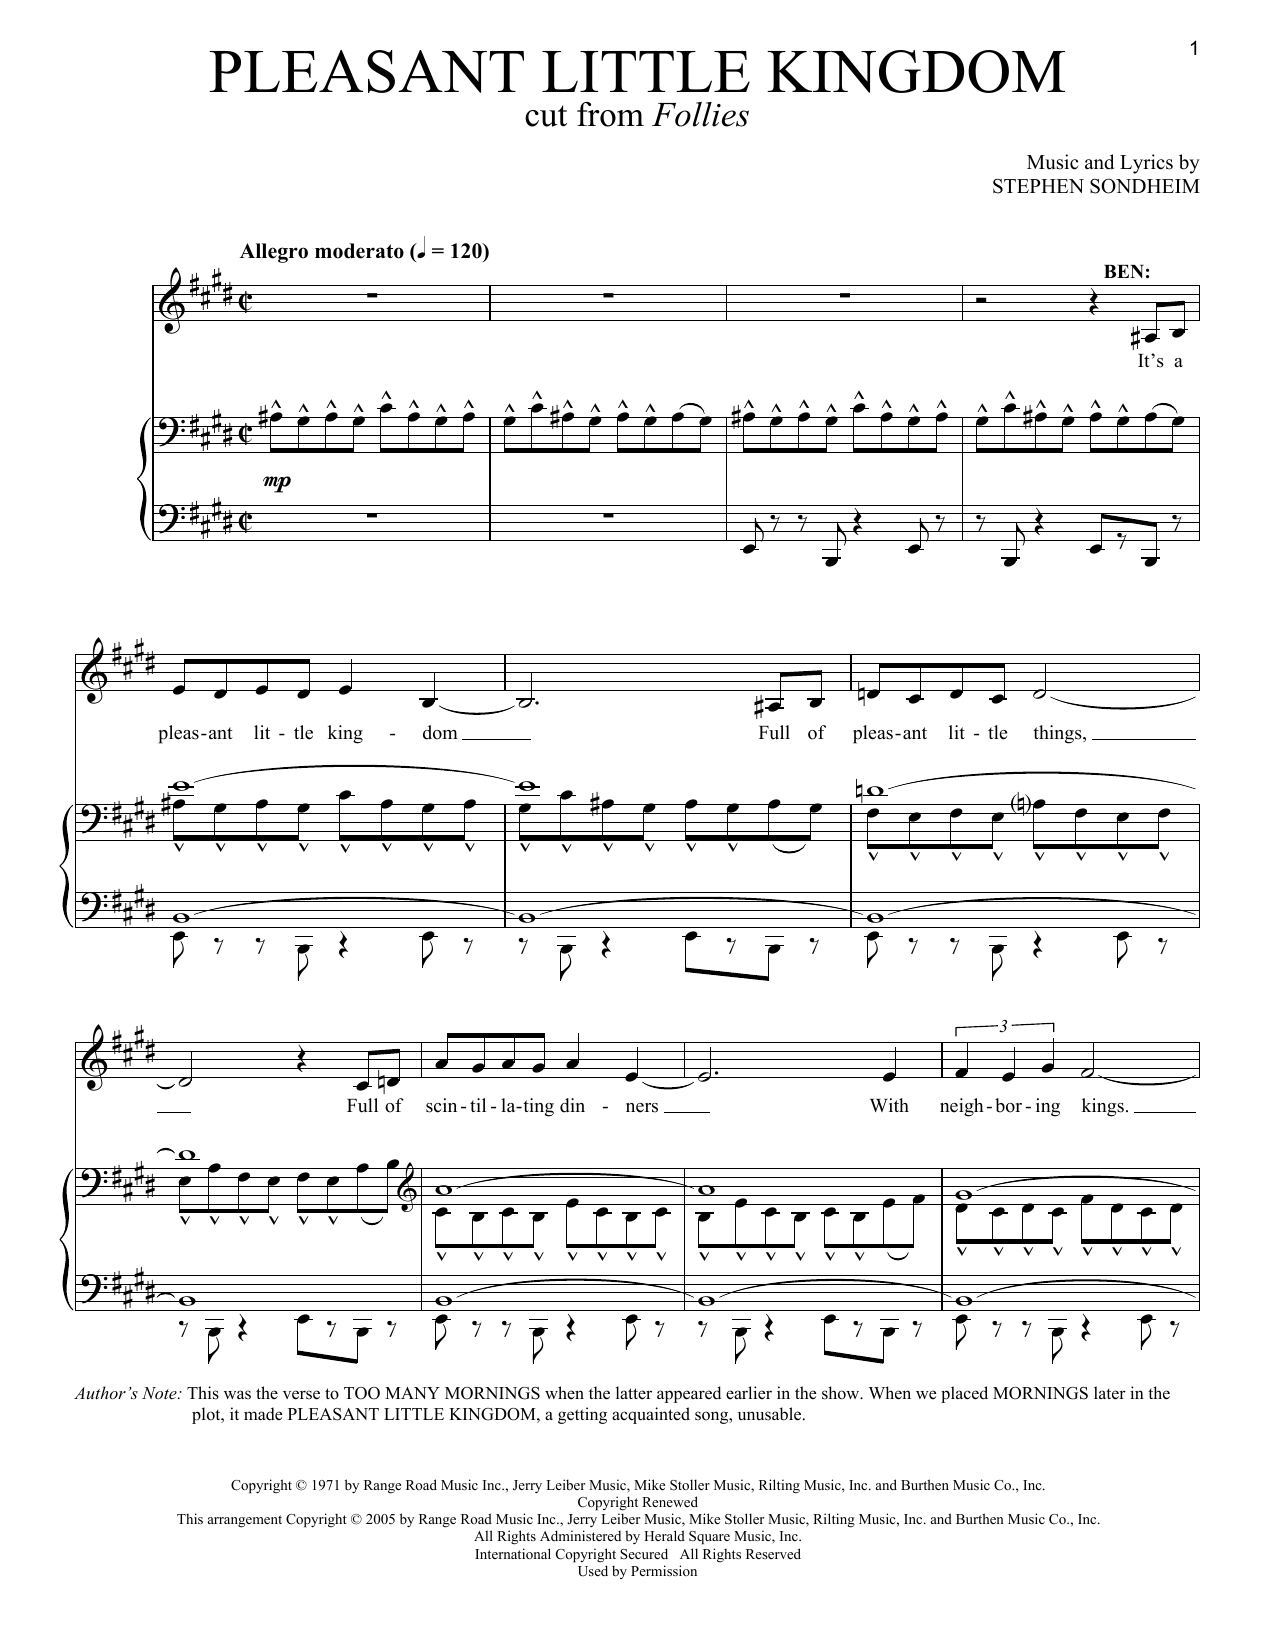 Stephen Sondheim Pleasant Little Kingdom Sheet Music Notes & Chords for Vocal Duet - Download or Print PDF